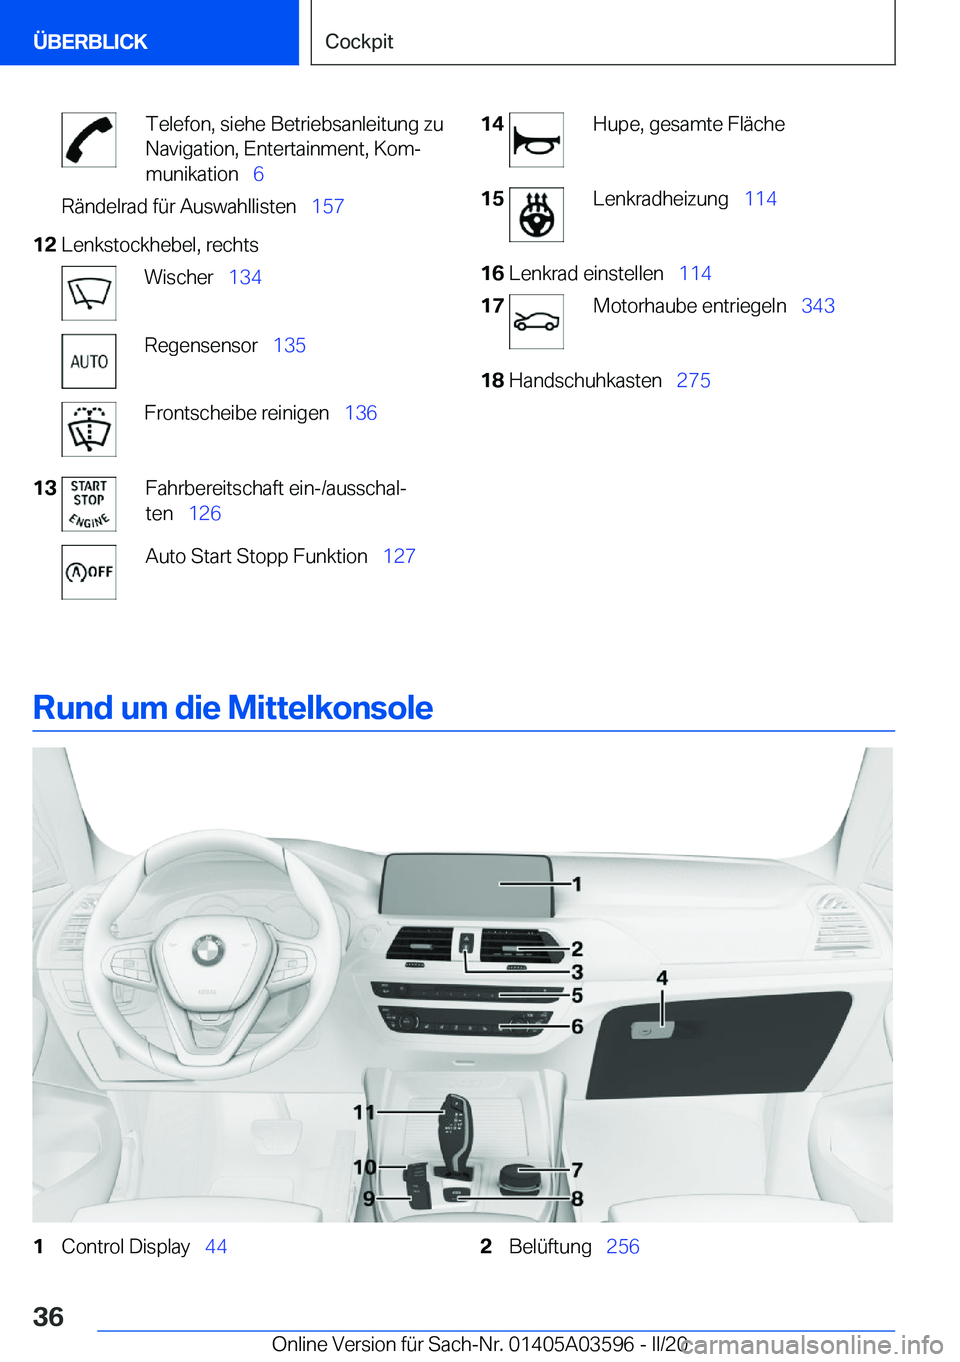 BMW X4 2020  Betriebsanleitungen (in German) �T�e�l�e�f�o�n�,��s�i�e�h�e��B�e�t�r�i�e�b�s�a�n�l�e�i�t�u�n�g��z�u
�N�a�v�i�g�a�t�i�o�n�,��E�n�t�e�r�t�a�i�n�m�e�n�t�,��K�o�mj
�m�u�n�i�k�a�t�i�o�n\_ �6�R�